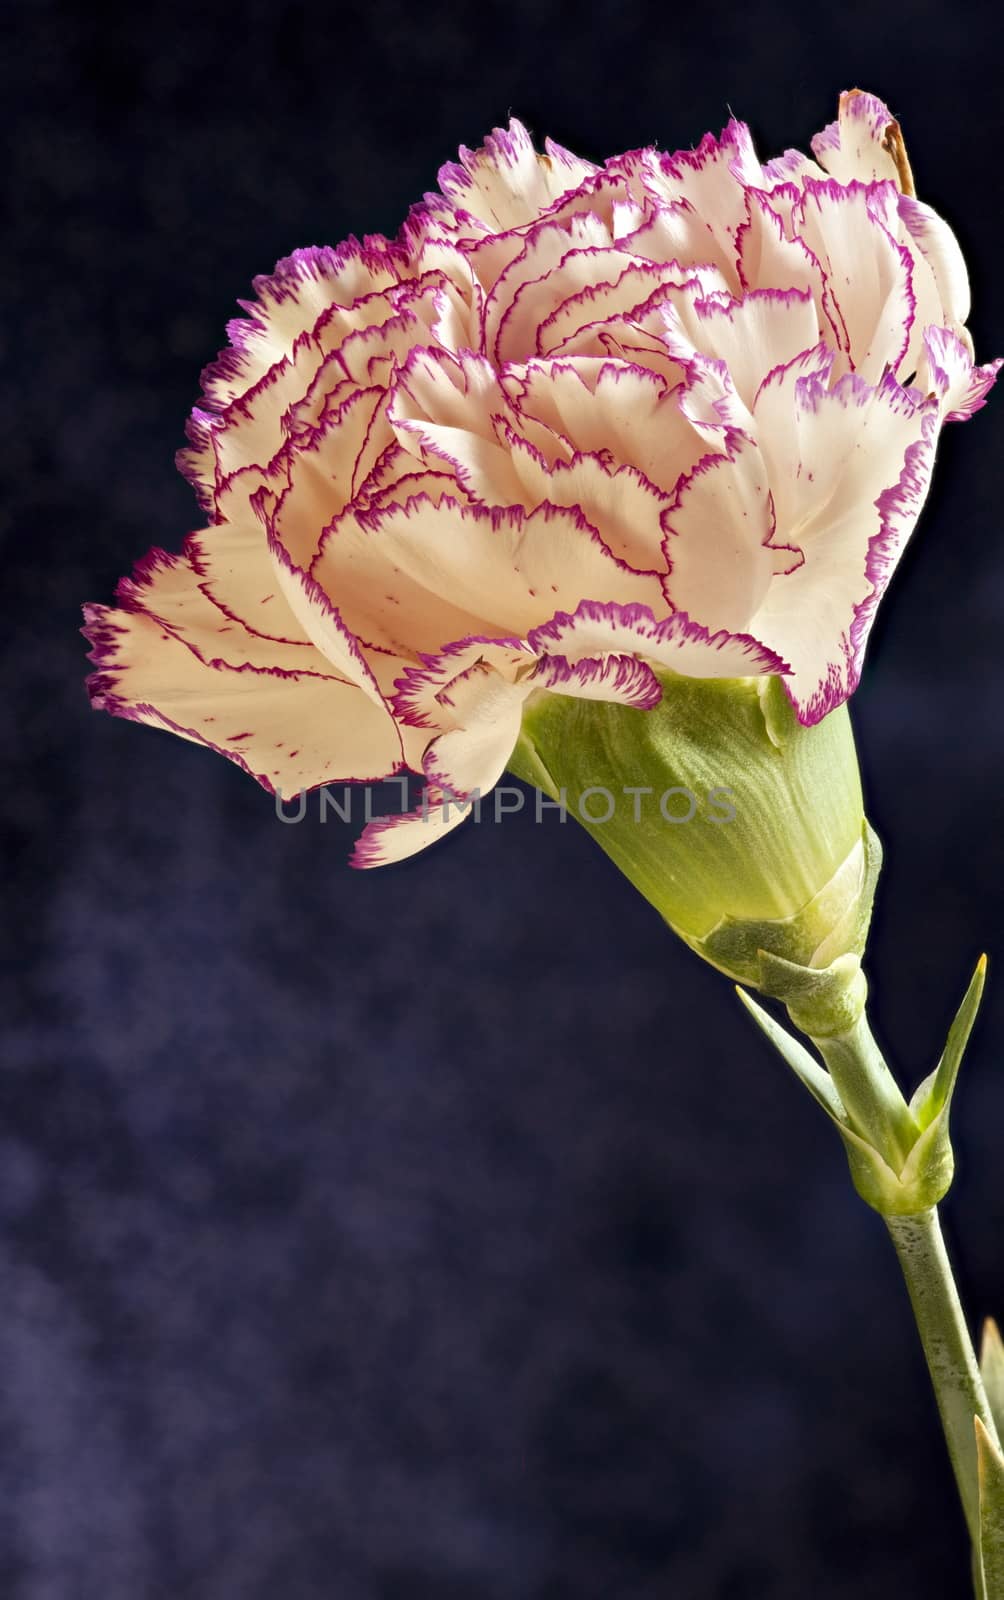 Single white purple Terry carnation flower dark background Macro shot